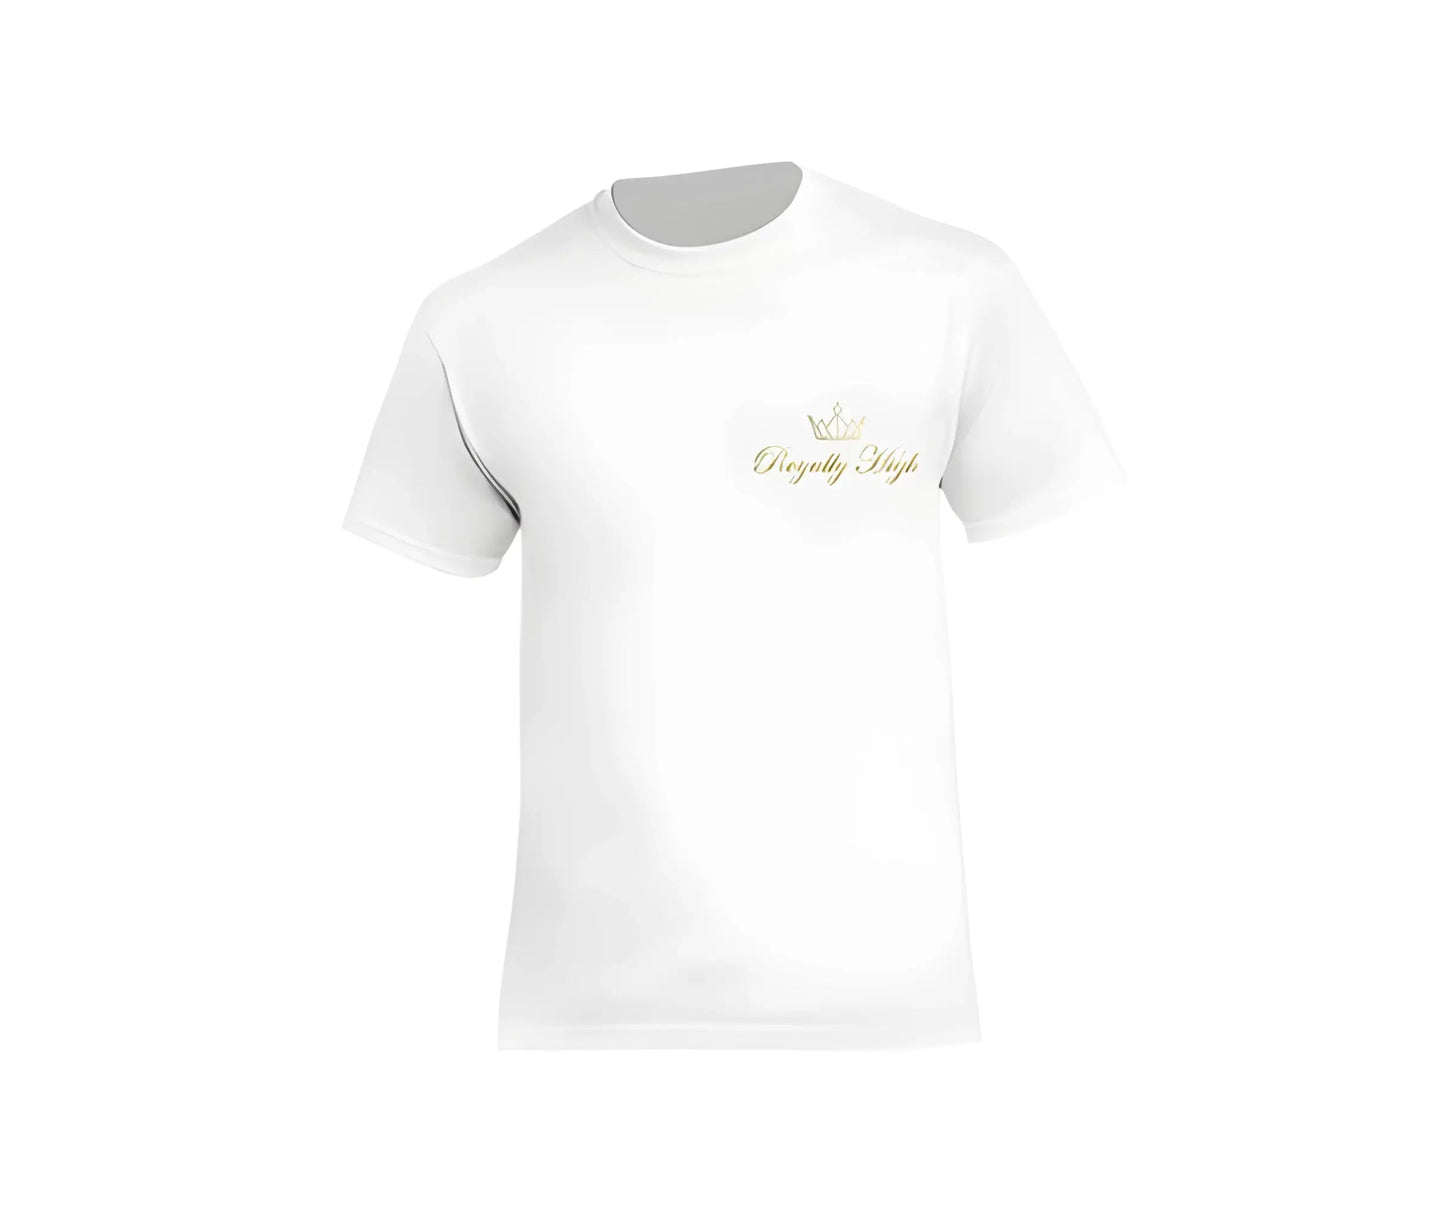 Royally High Signature Jersey T-shirt